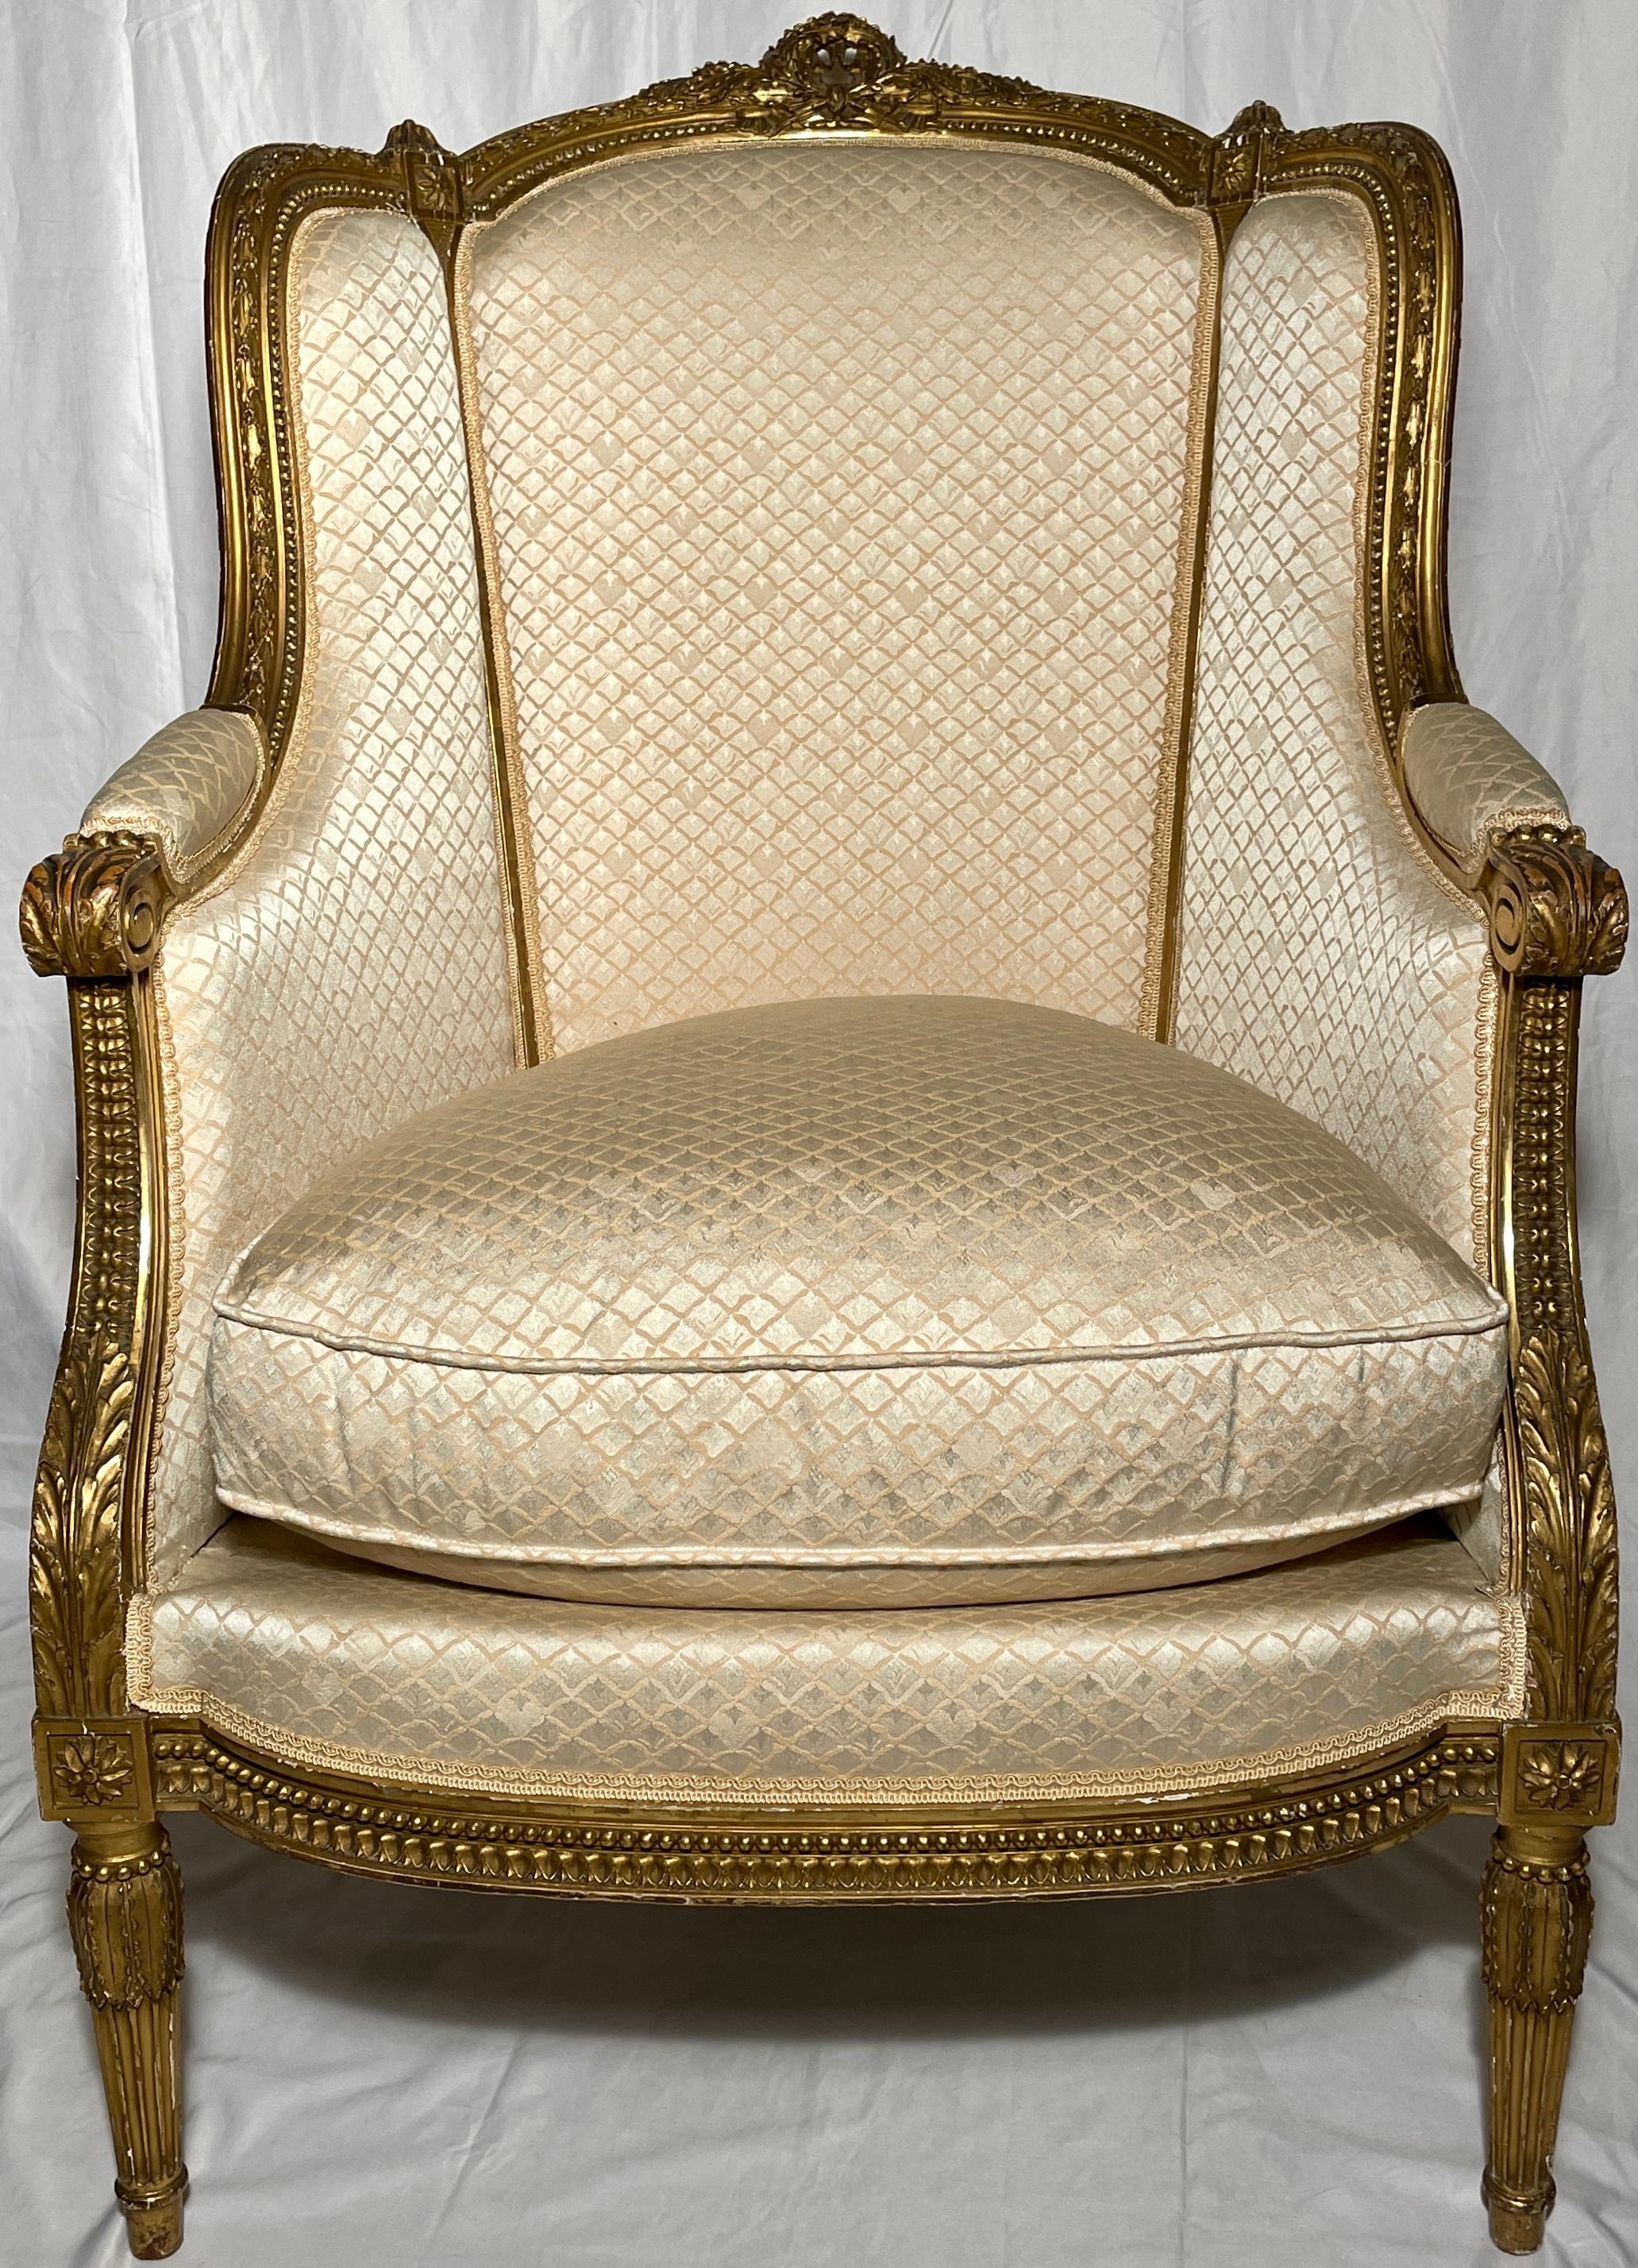 Pair antique French Louis XVI gold leaf fauteuils / armchairs, Circa 1865-1875.